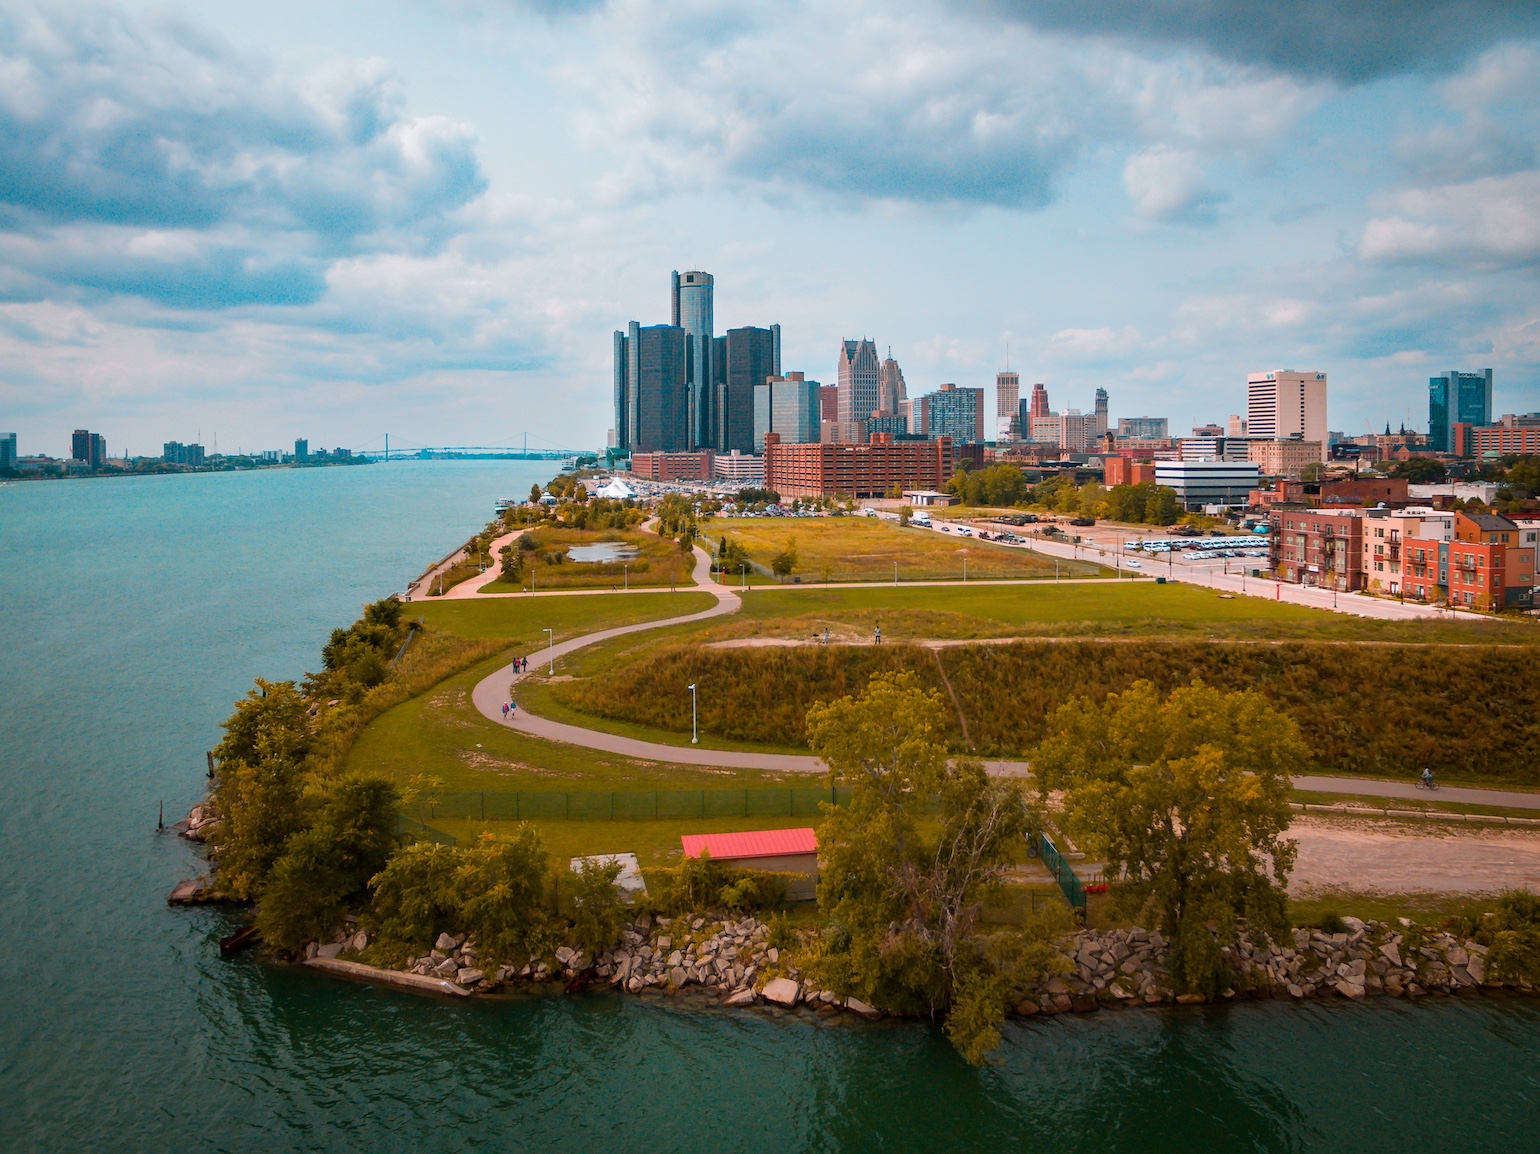 Detroit Rivertown aerial view